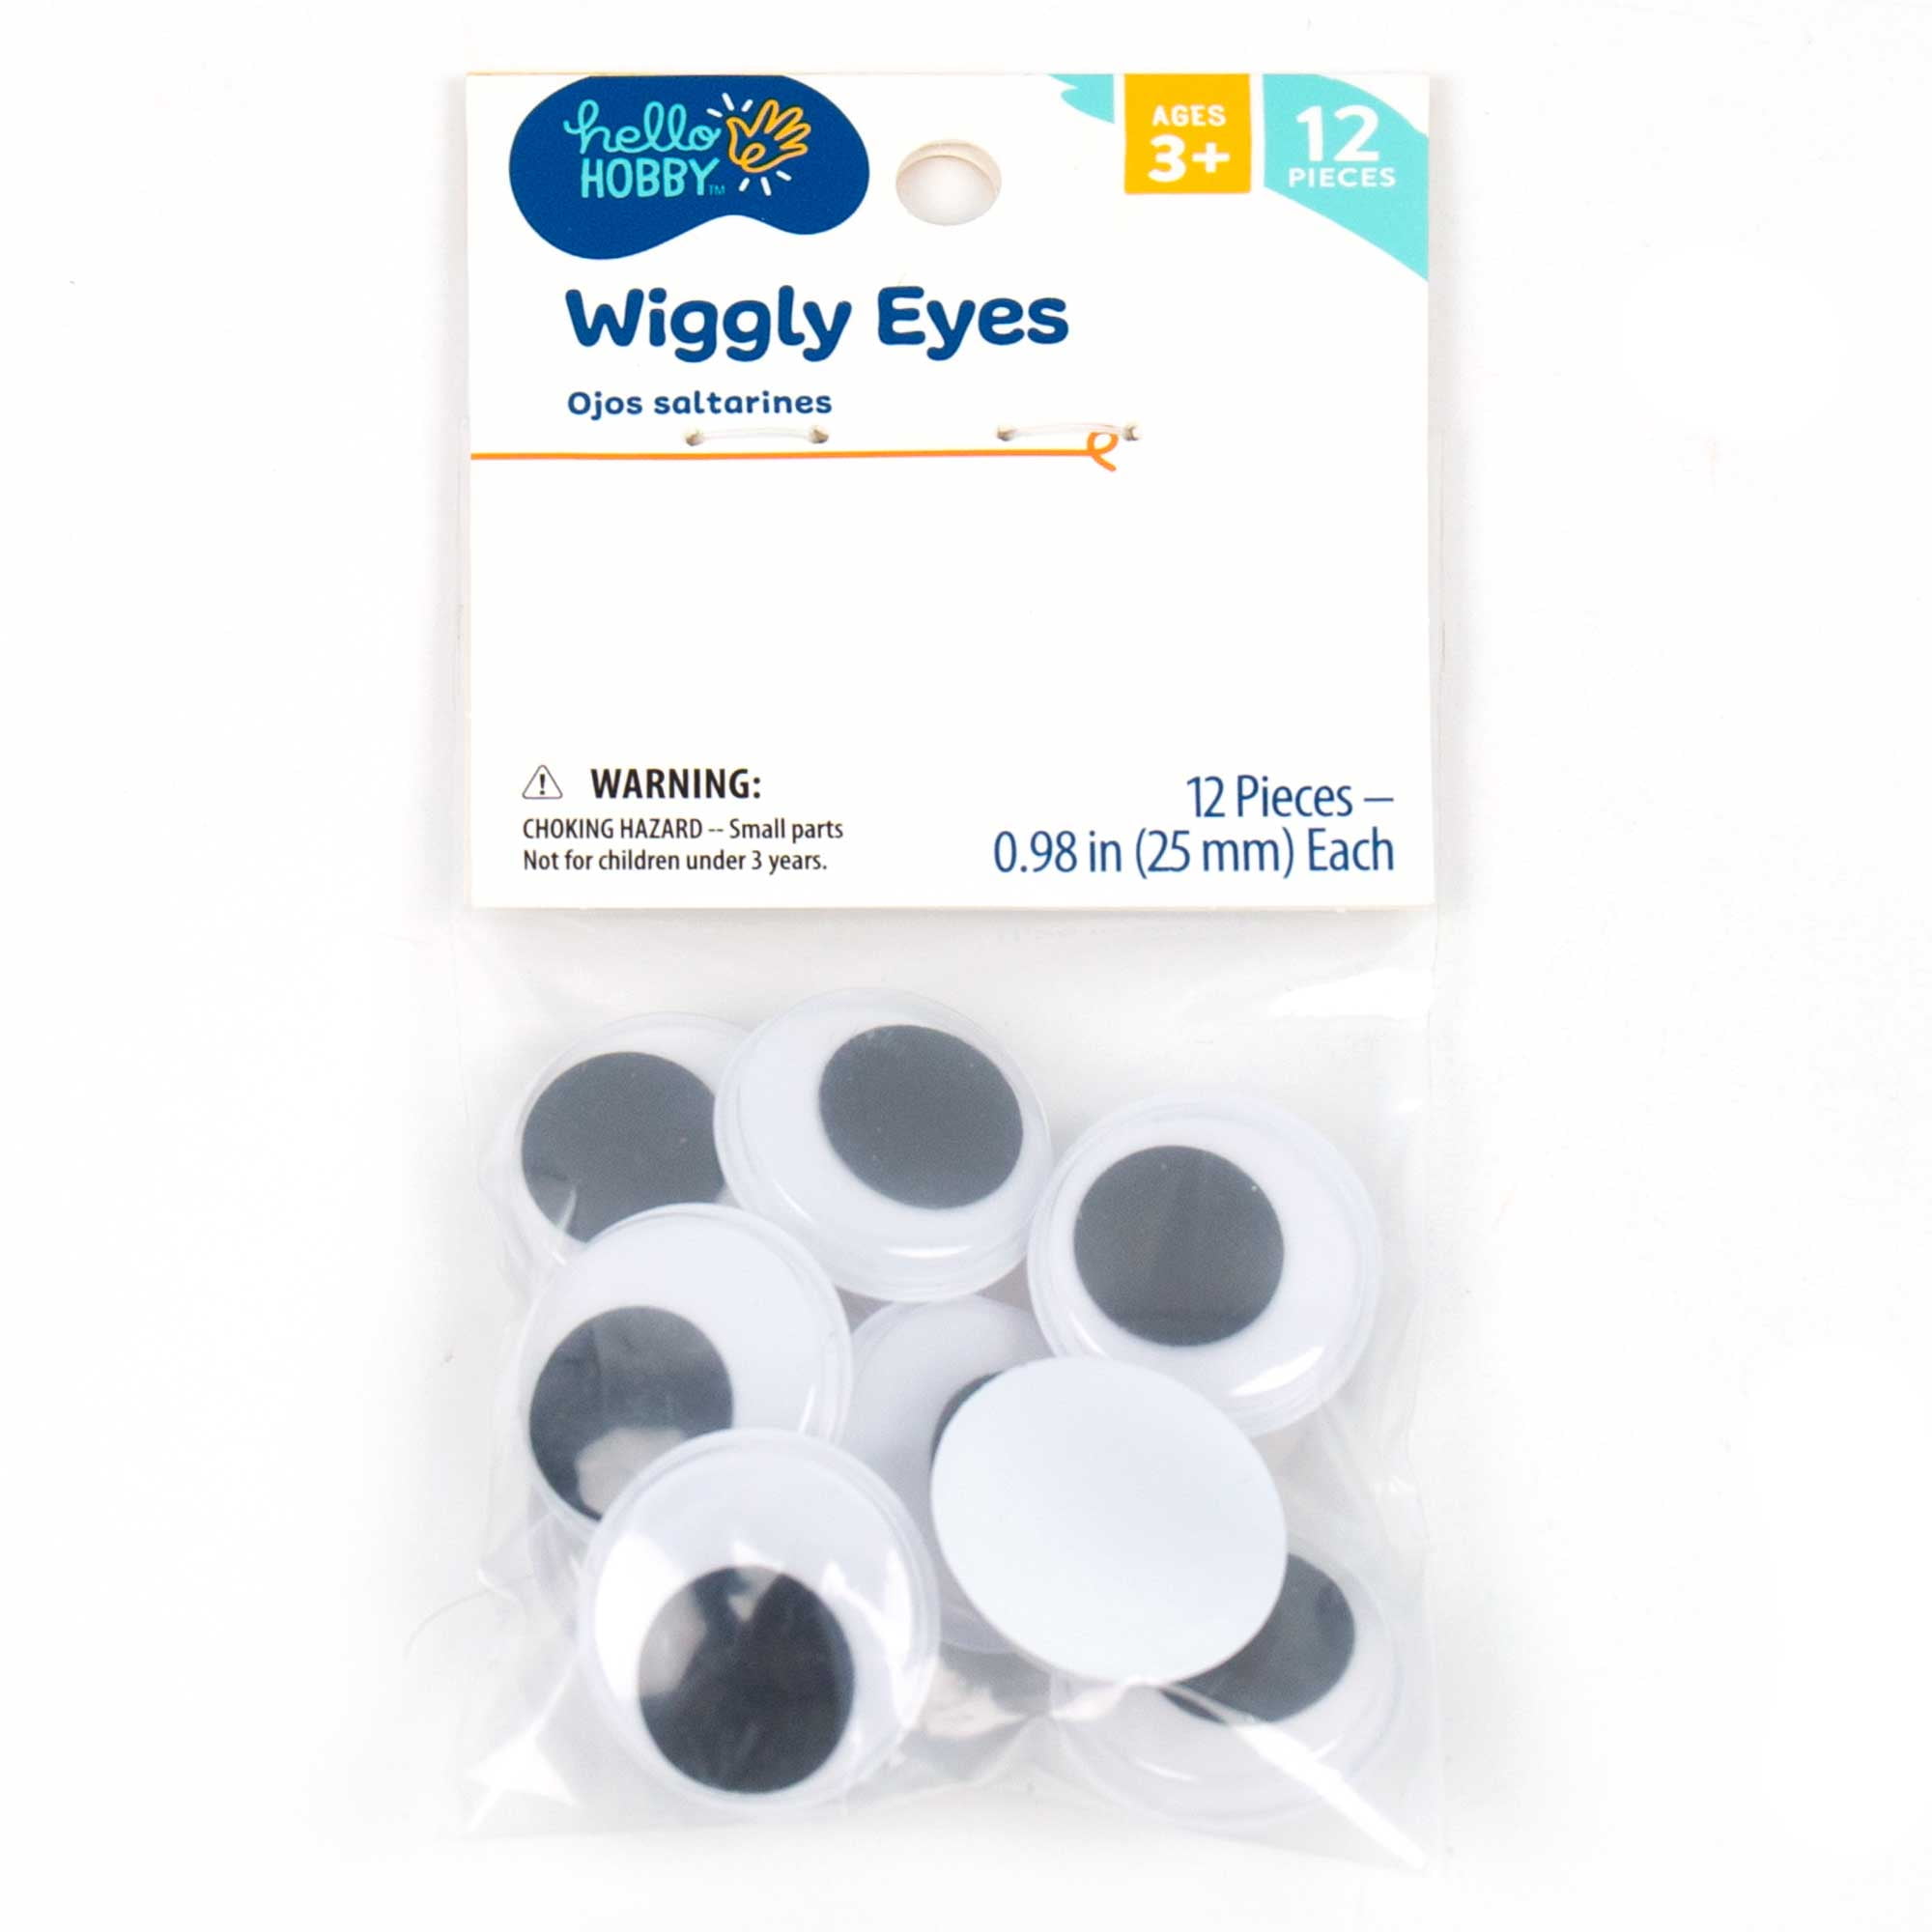 Wiggle Eyes Value Pack, Hobby Lobby